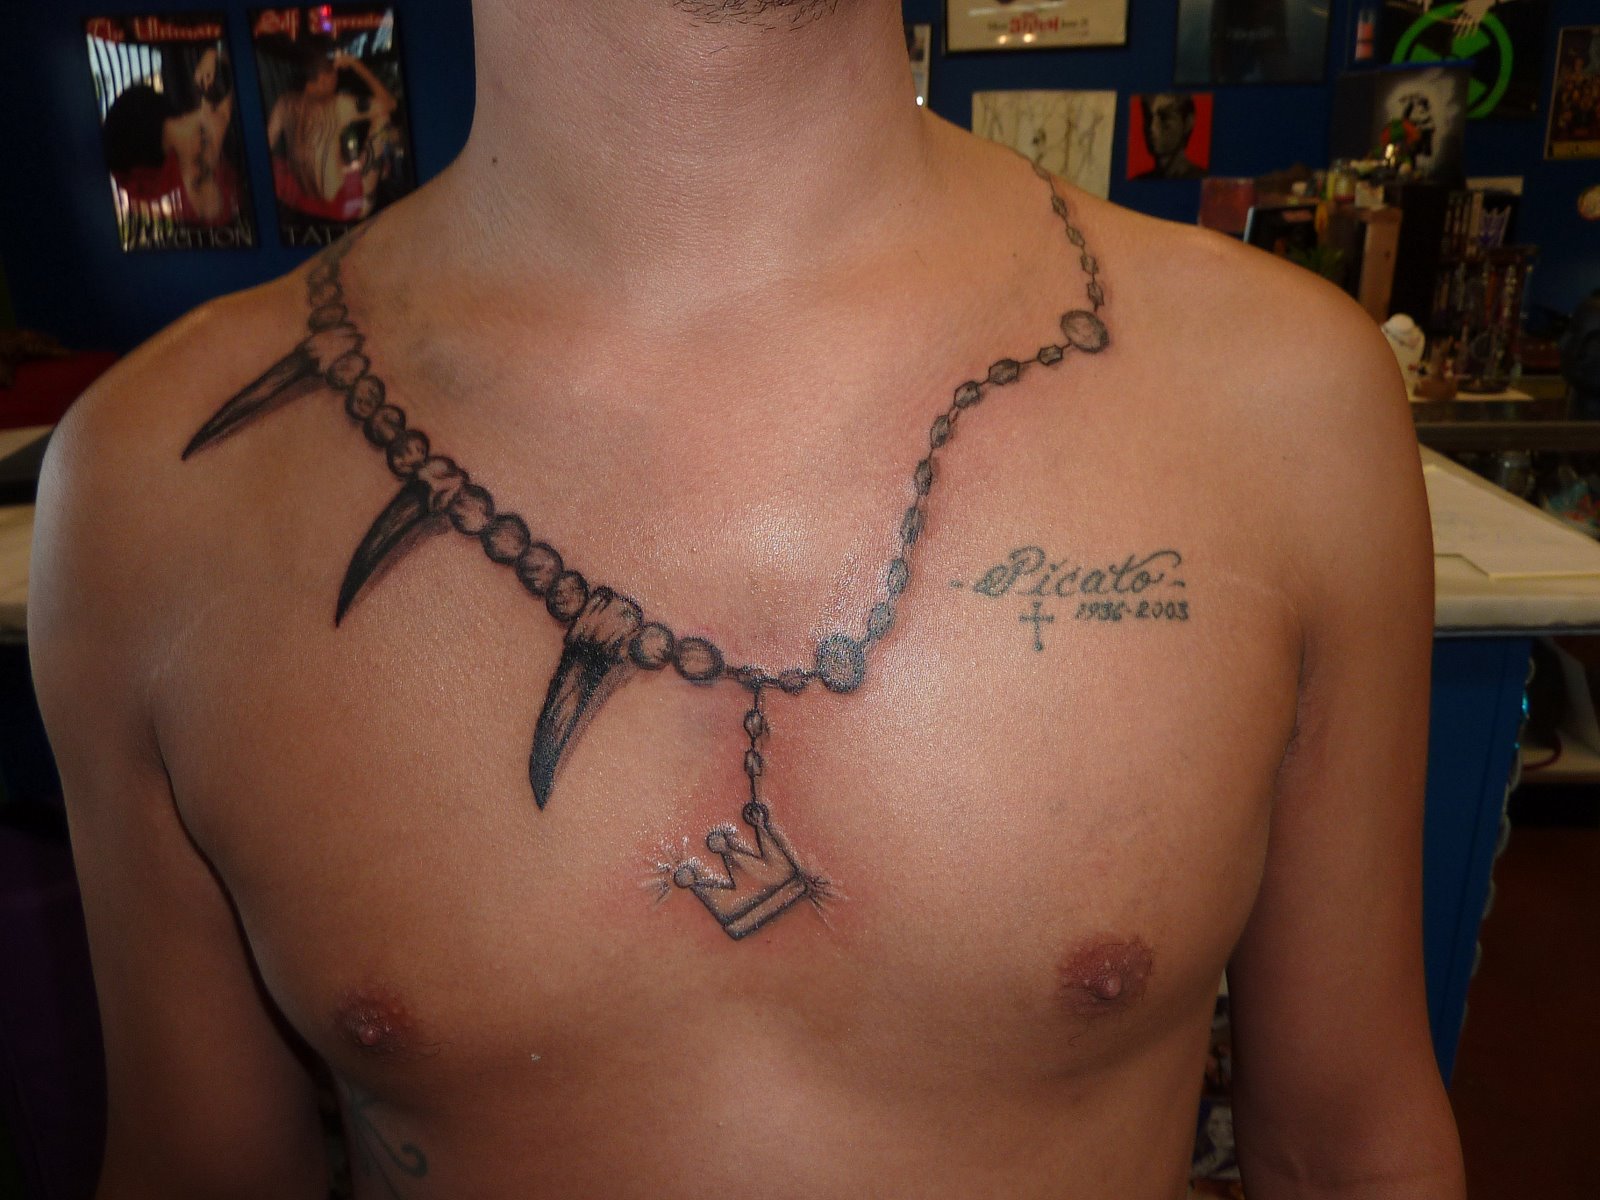 3. Cross Tattoo Choker Necklace - wide 4